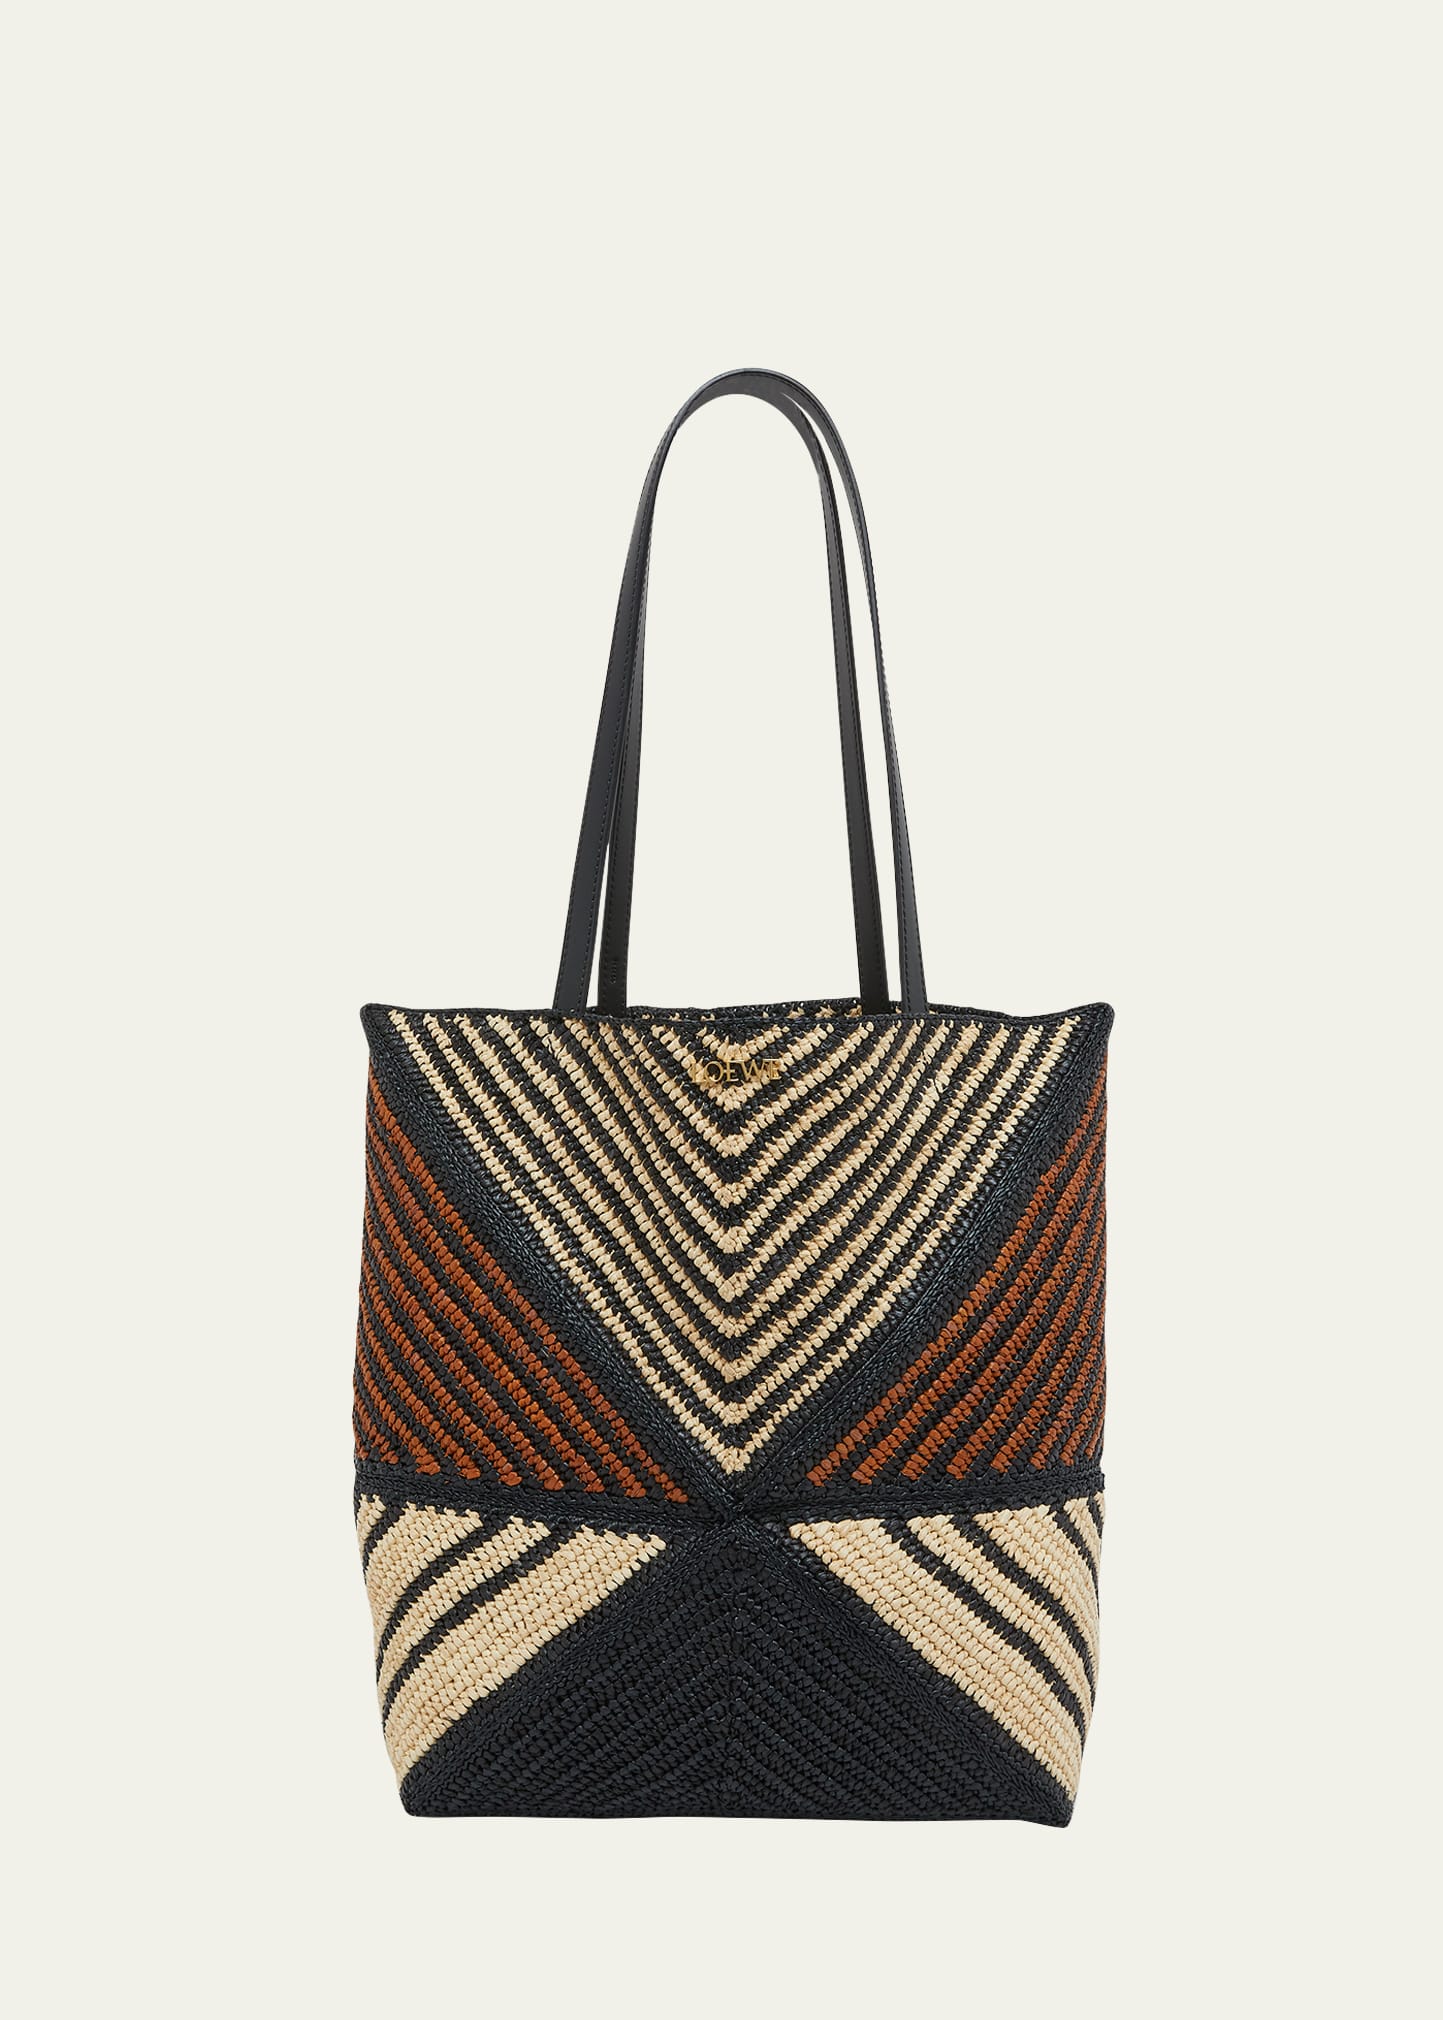 x Paula's Ibiza Medium Puzzle Fold Tote Bag in Striped Raffia with Leather Handles